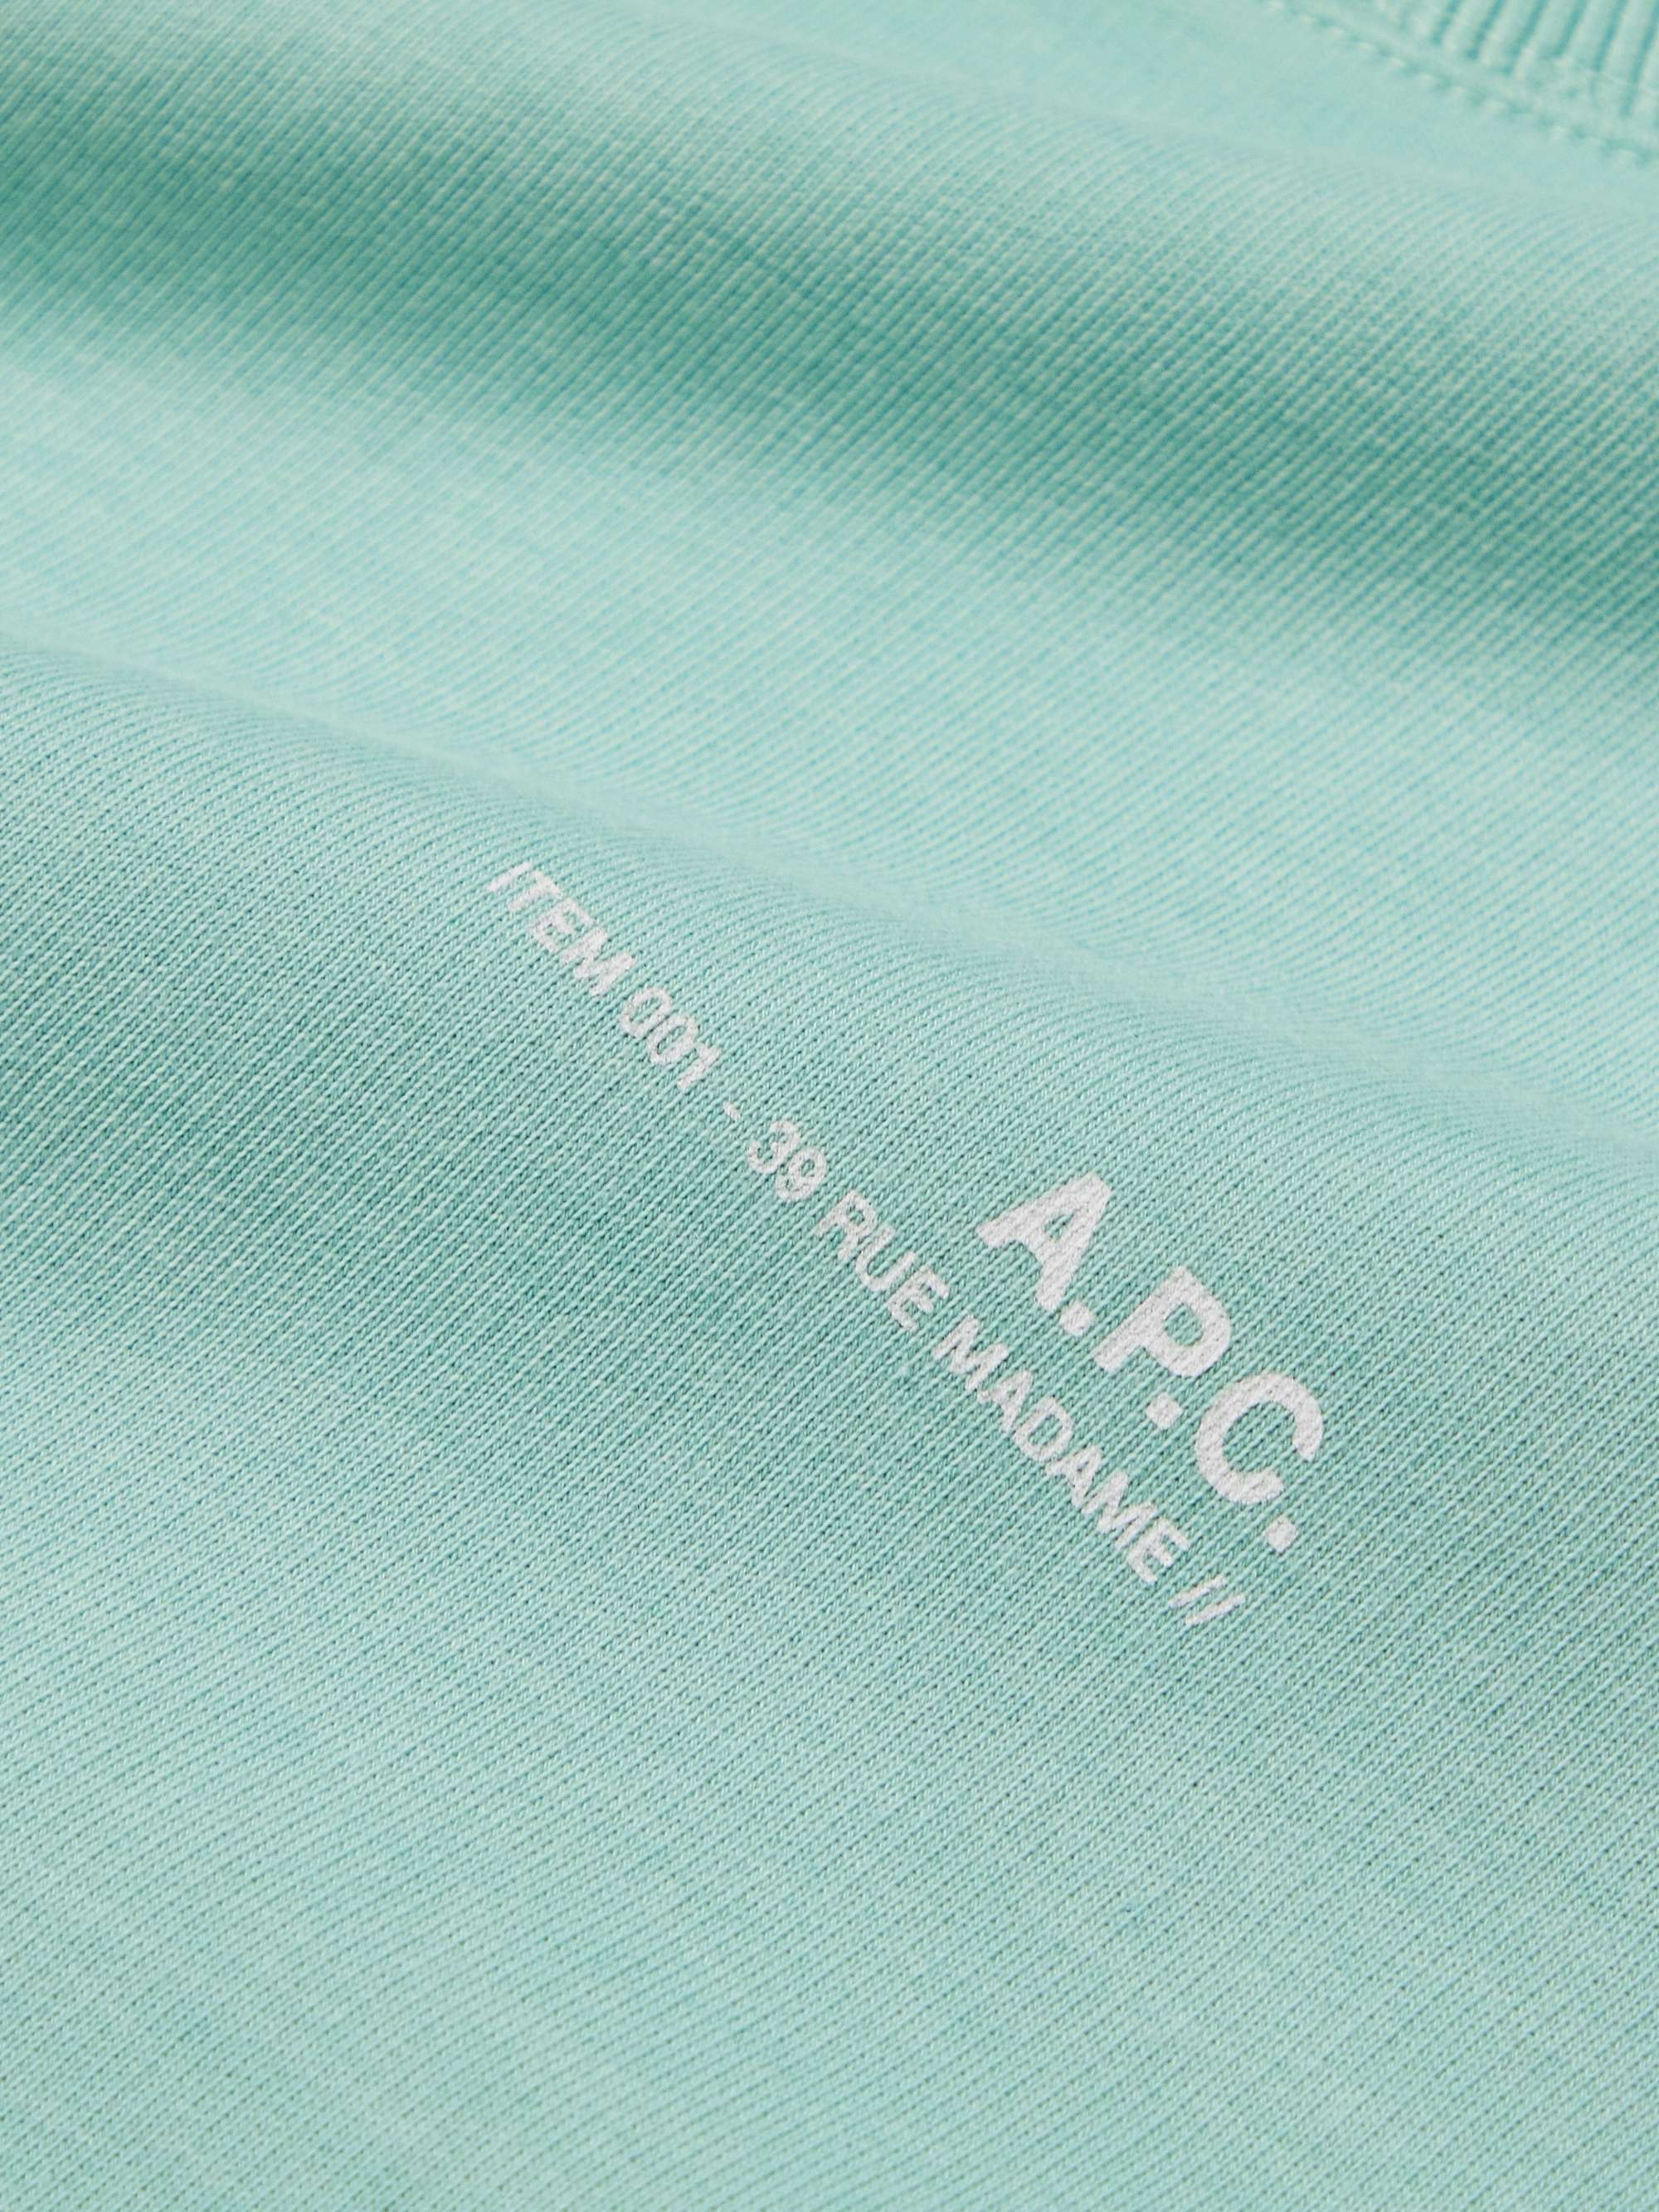 A.P.C. Logo-Print Cotton-Blend Jersey Sweatshirt